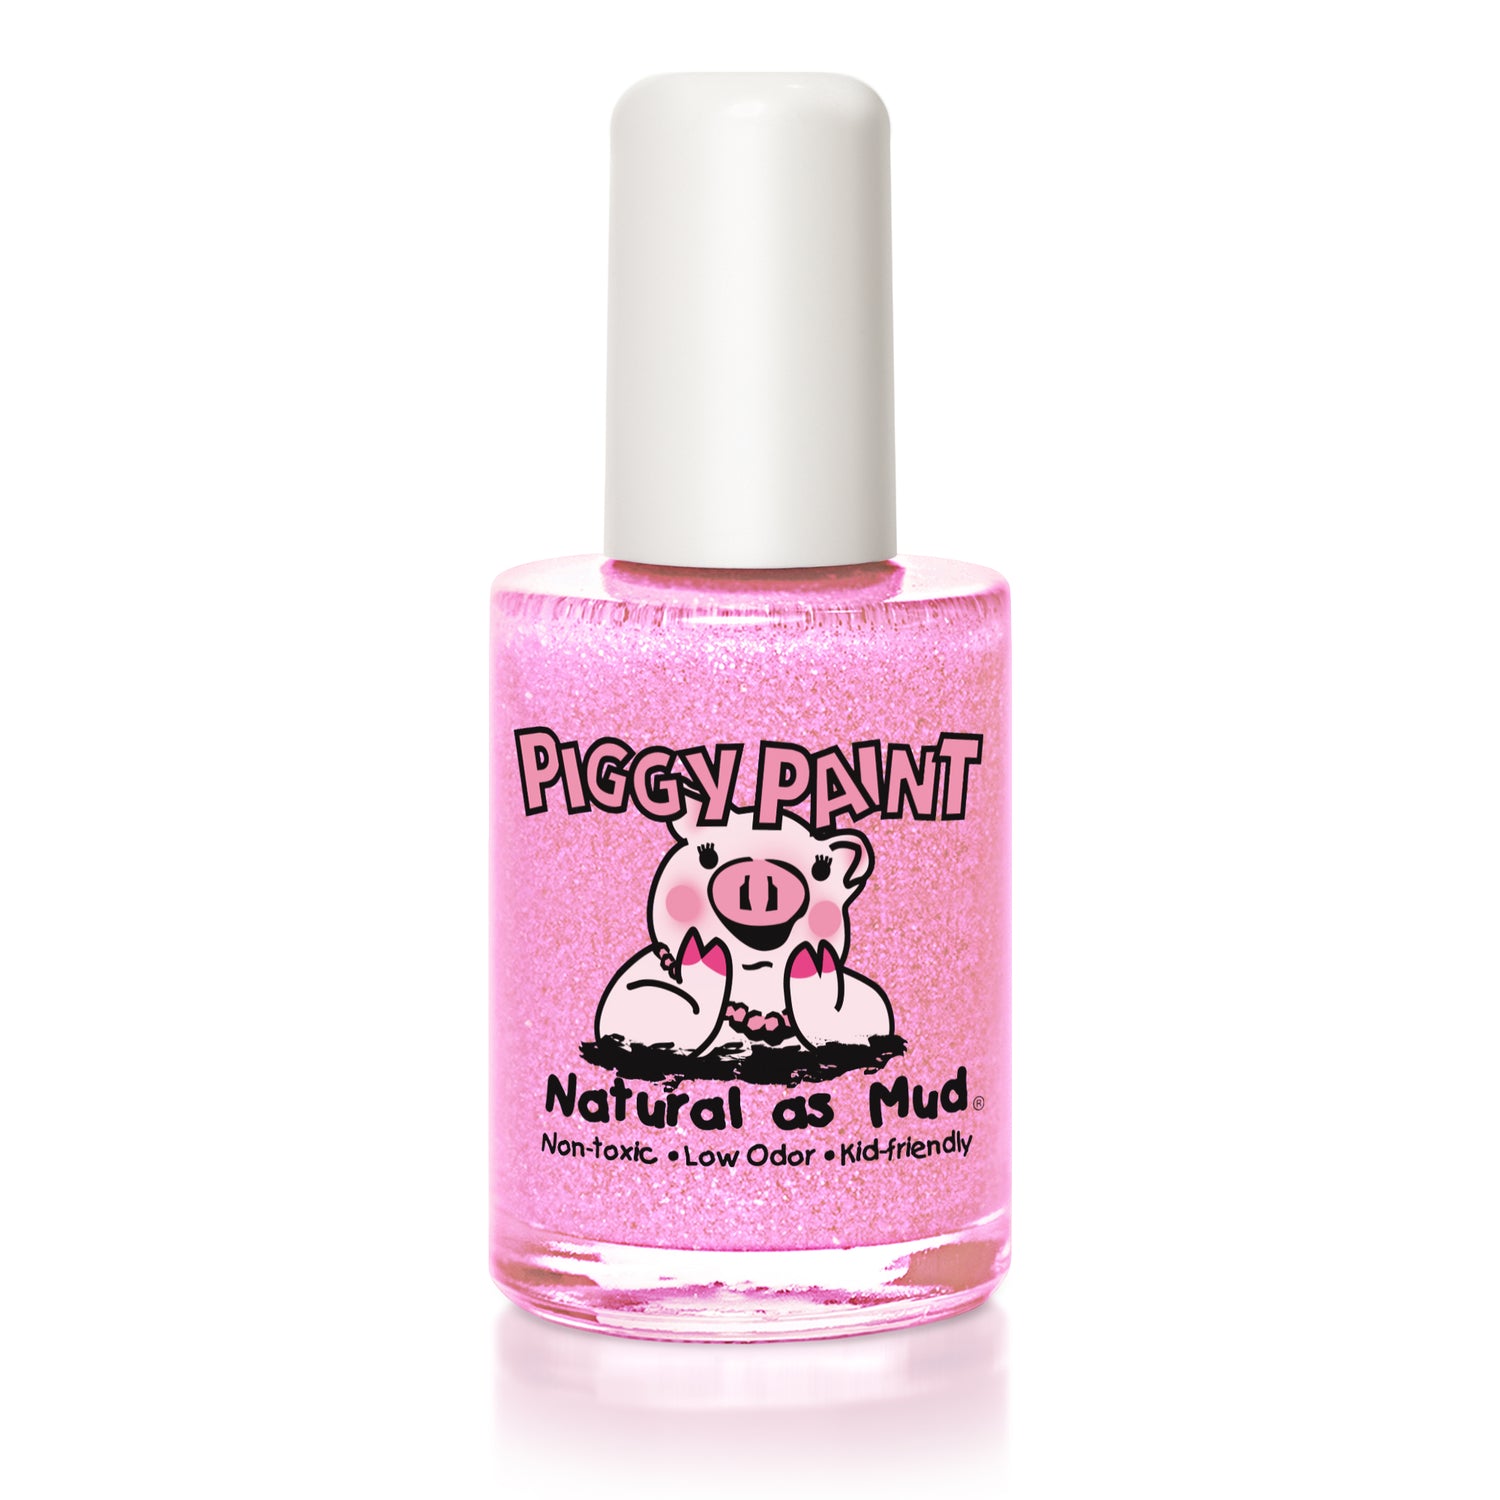 Pink Iridescent Nail Polish // Vegan Nail Polish // C√¥te‚Ñ¢ – côte